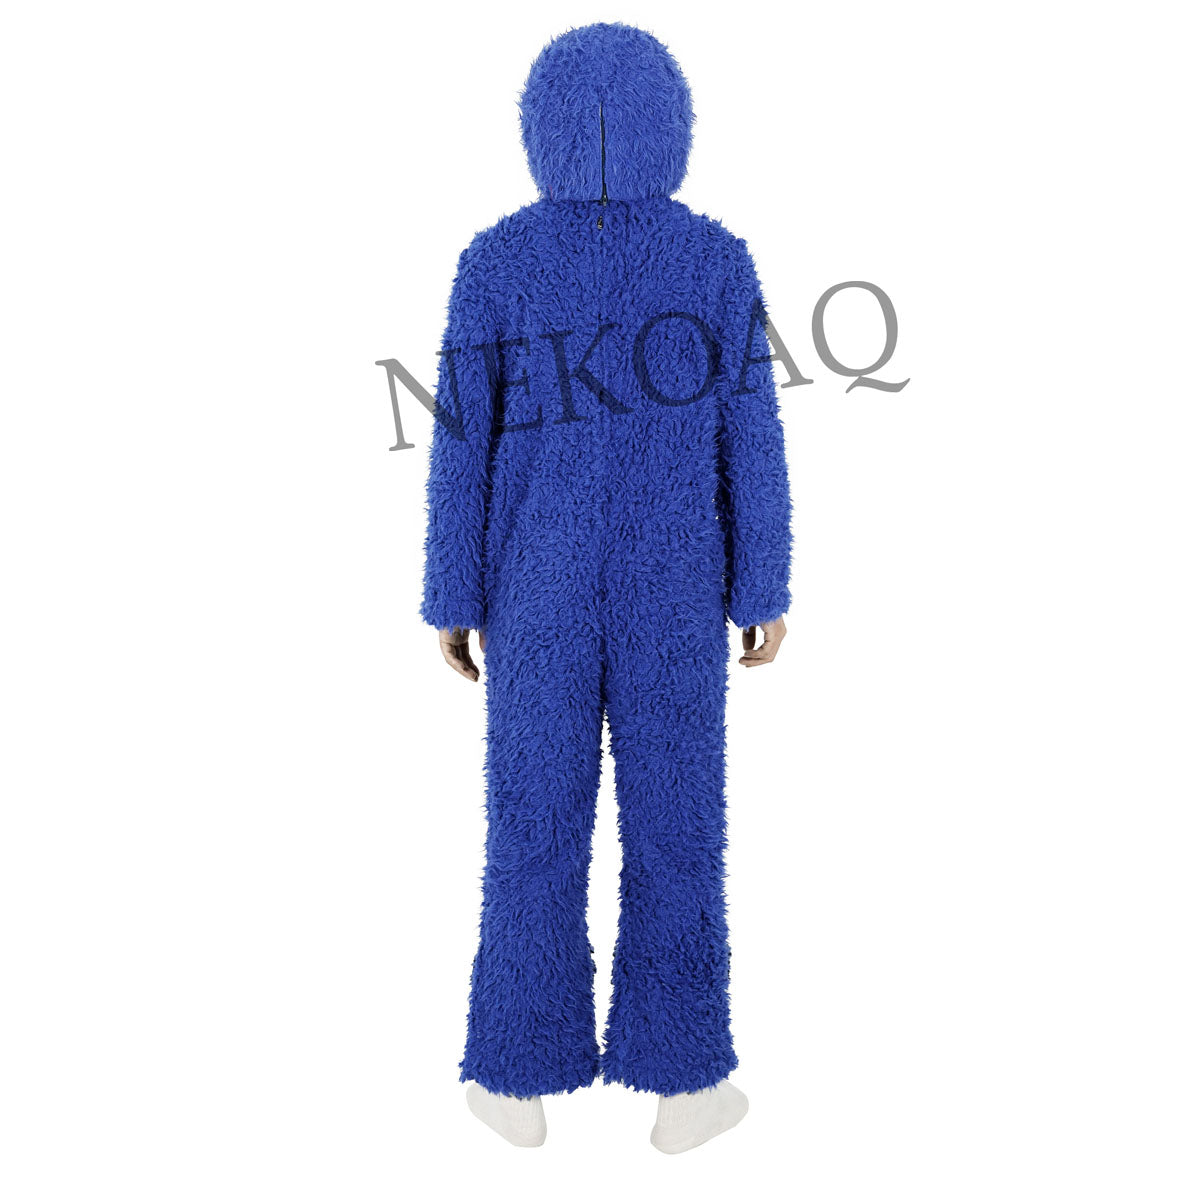 Grover Costume